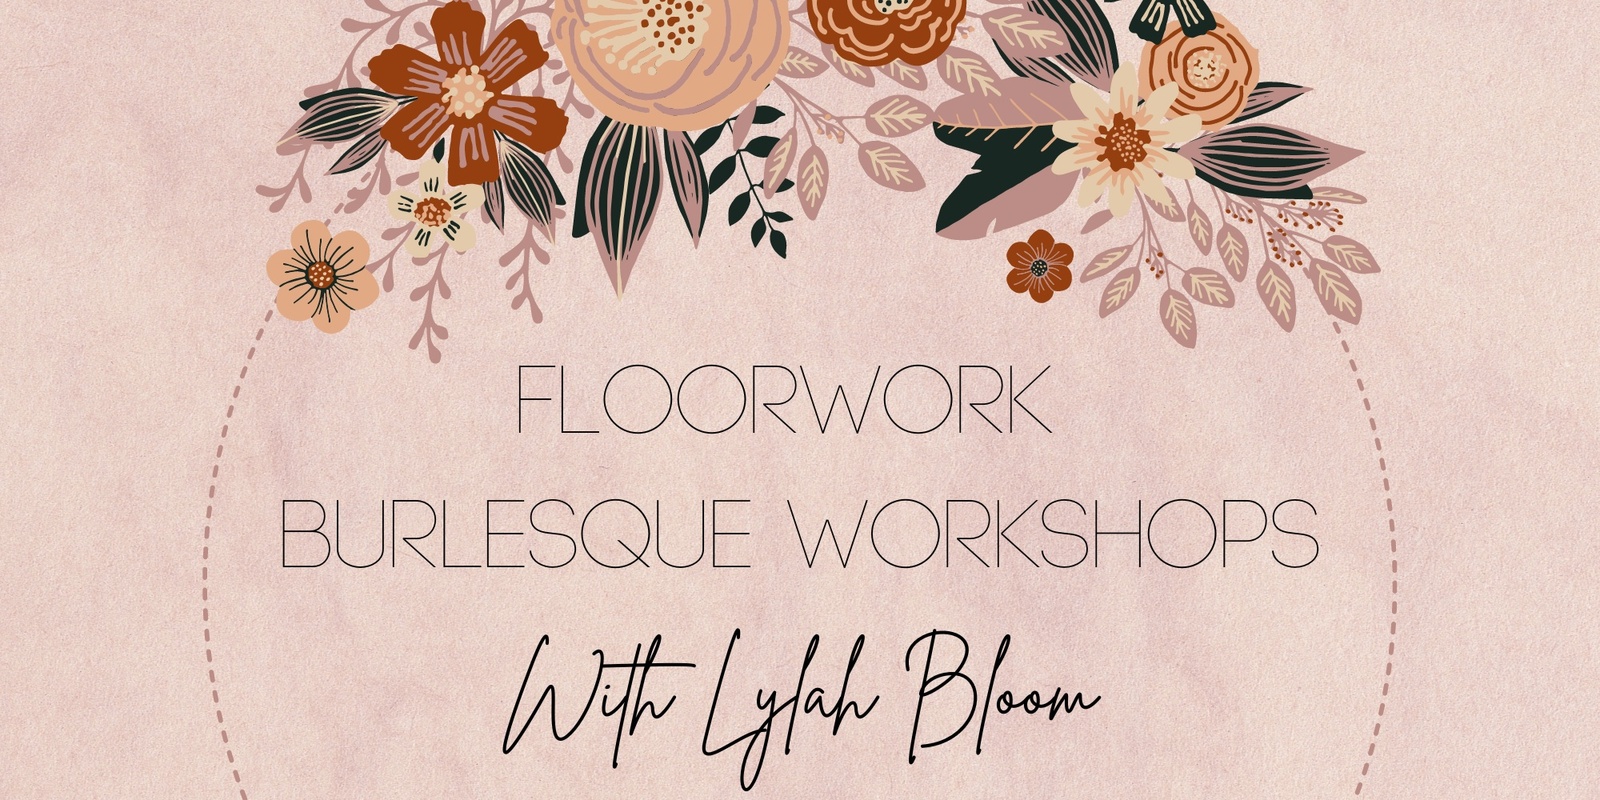 Banner image for Floorwork Burlesque Workshops with Lylah Bloom 